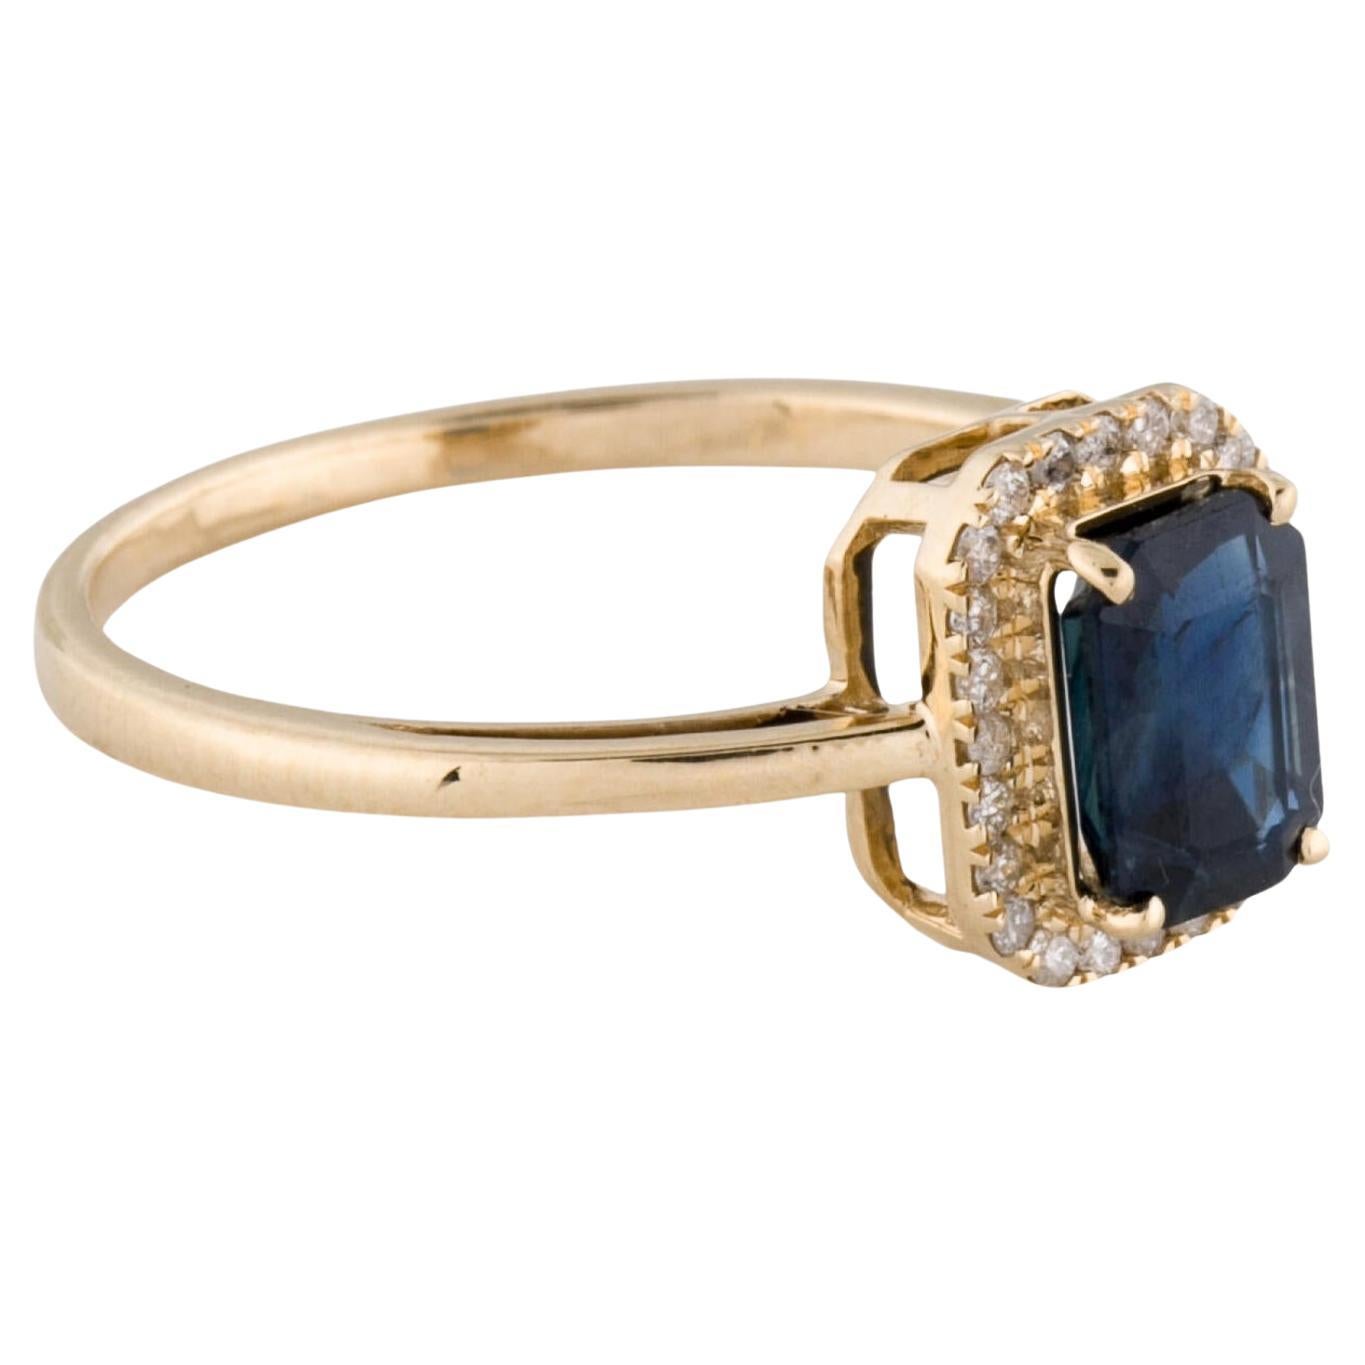 Elegant 14K Yellow Gold Emerald Cut Sapphire & Diamond Cocktail Ring, 1.11ctw